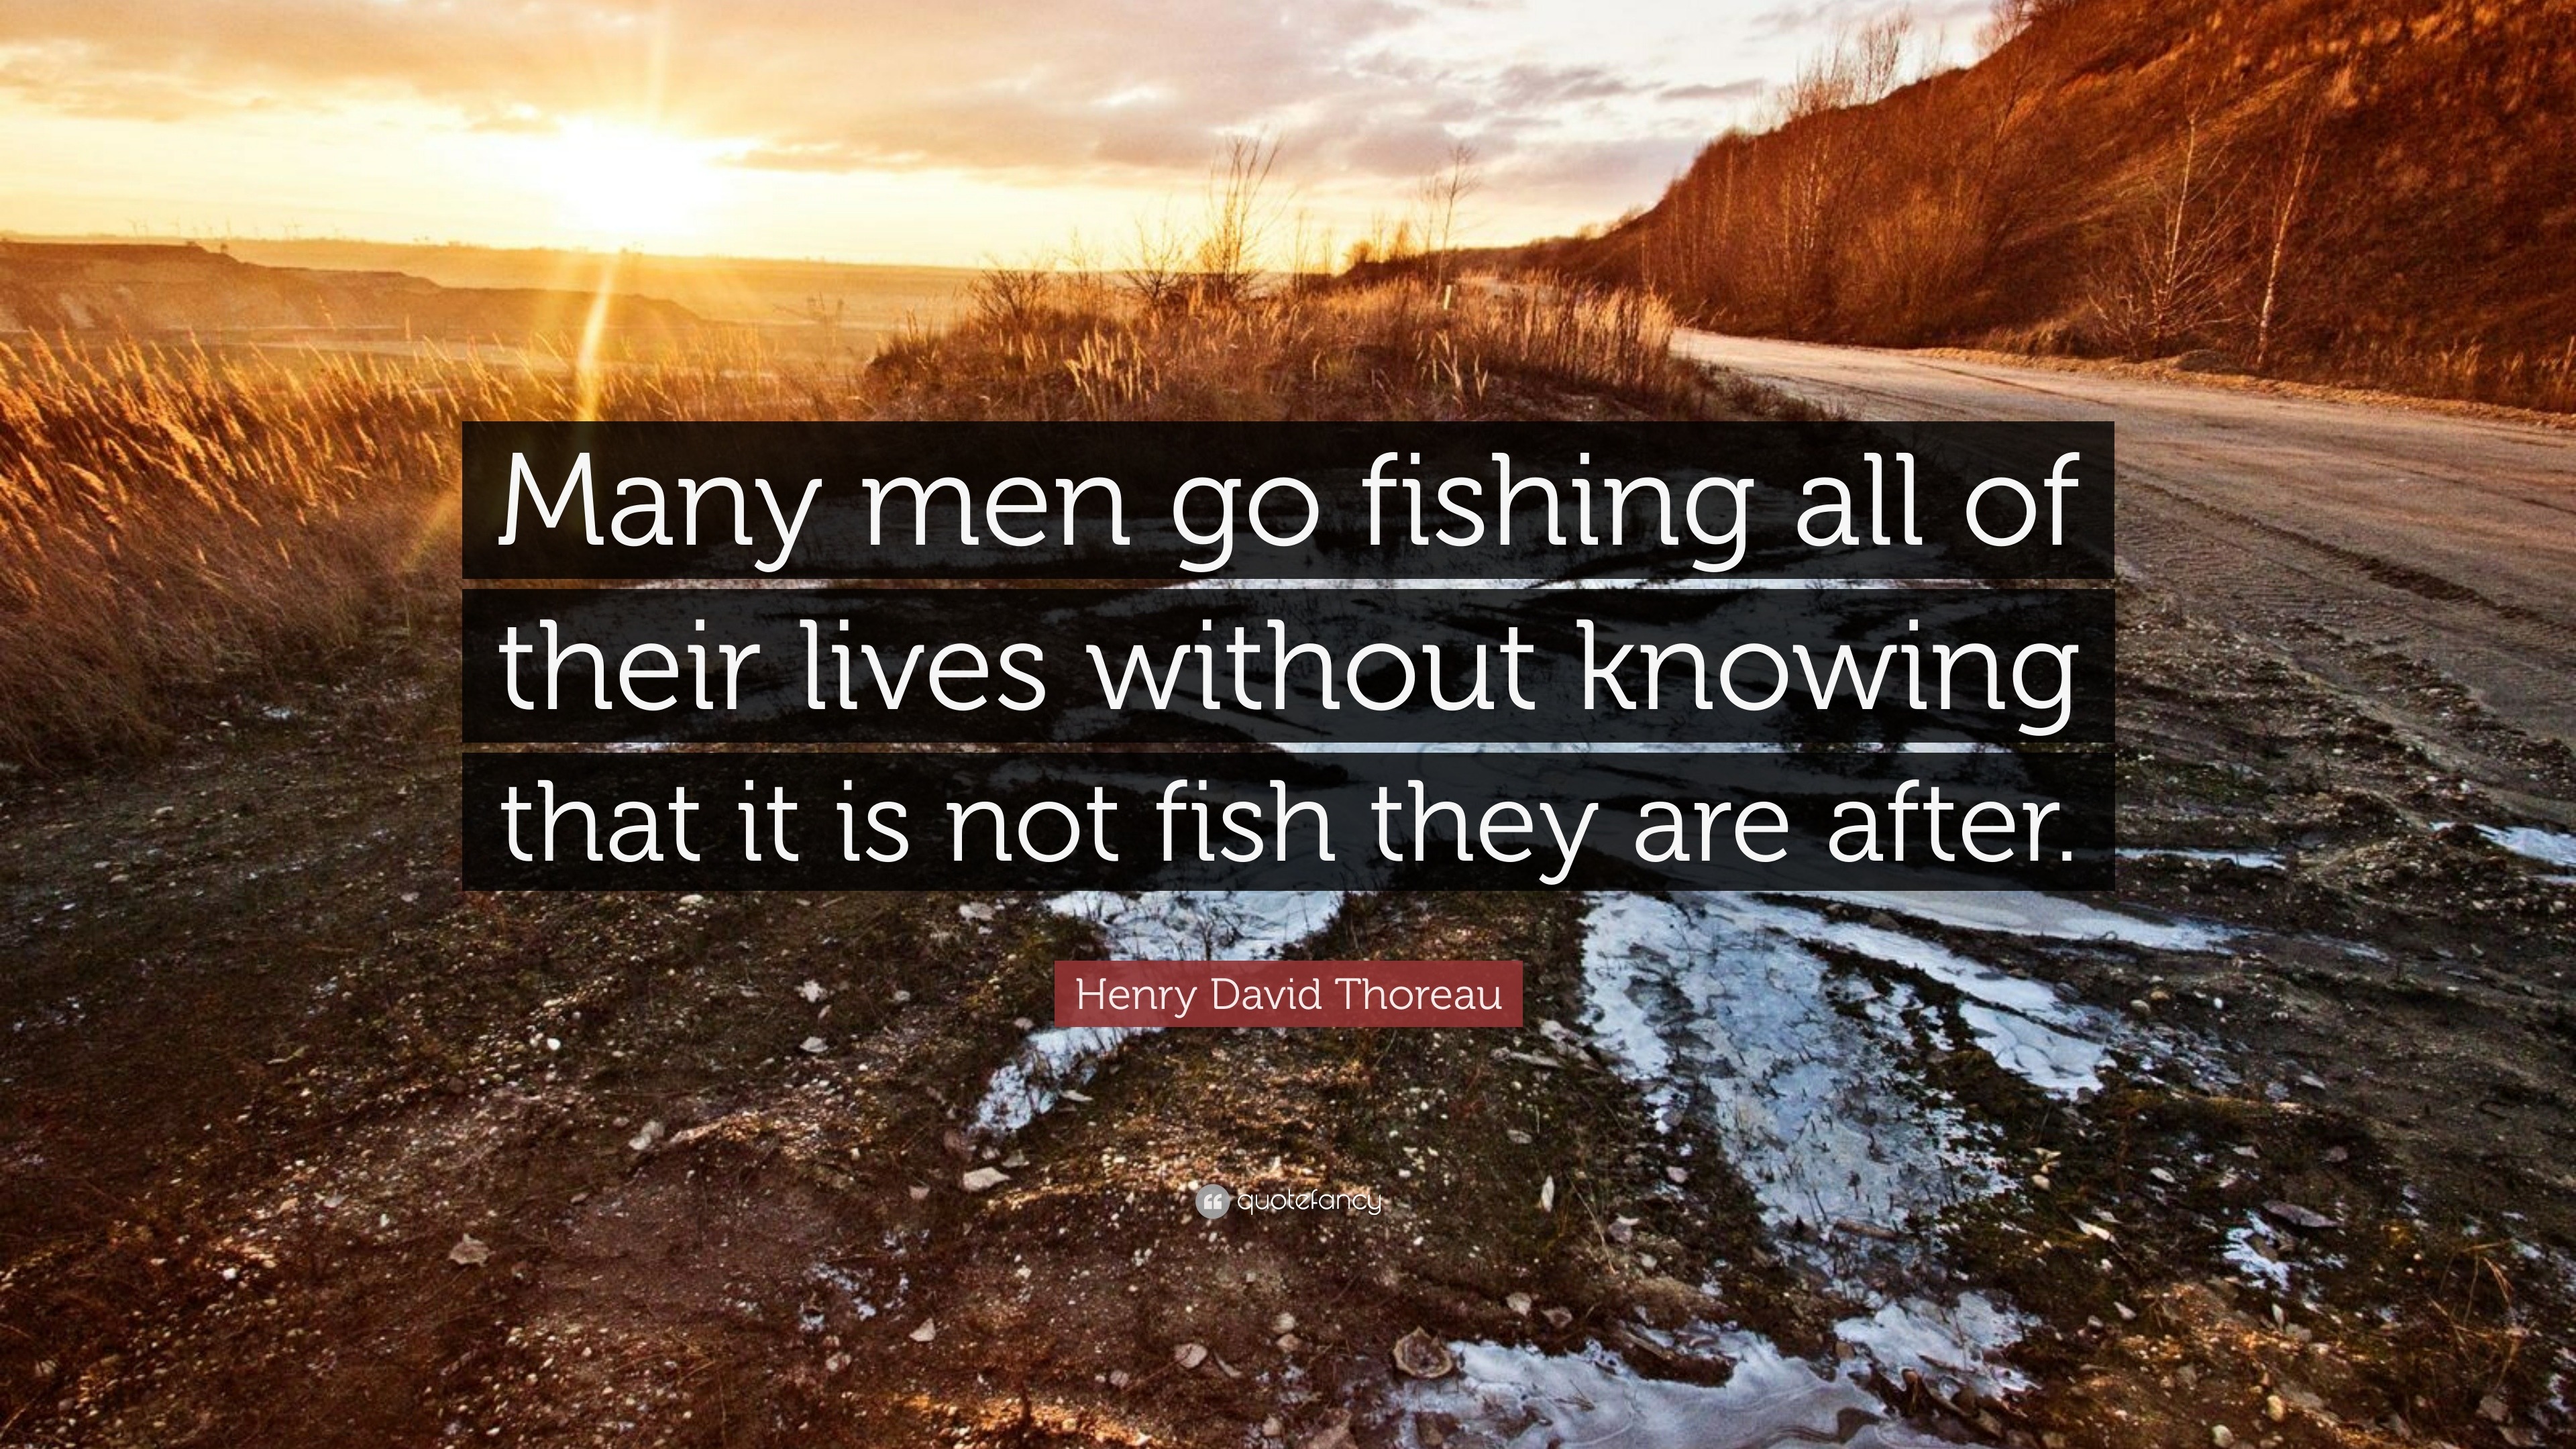 Henry David Thoreau Quote “Many men go fishing all of